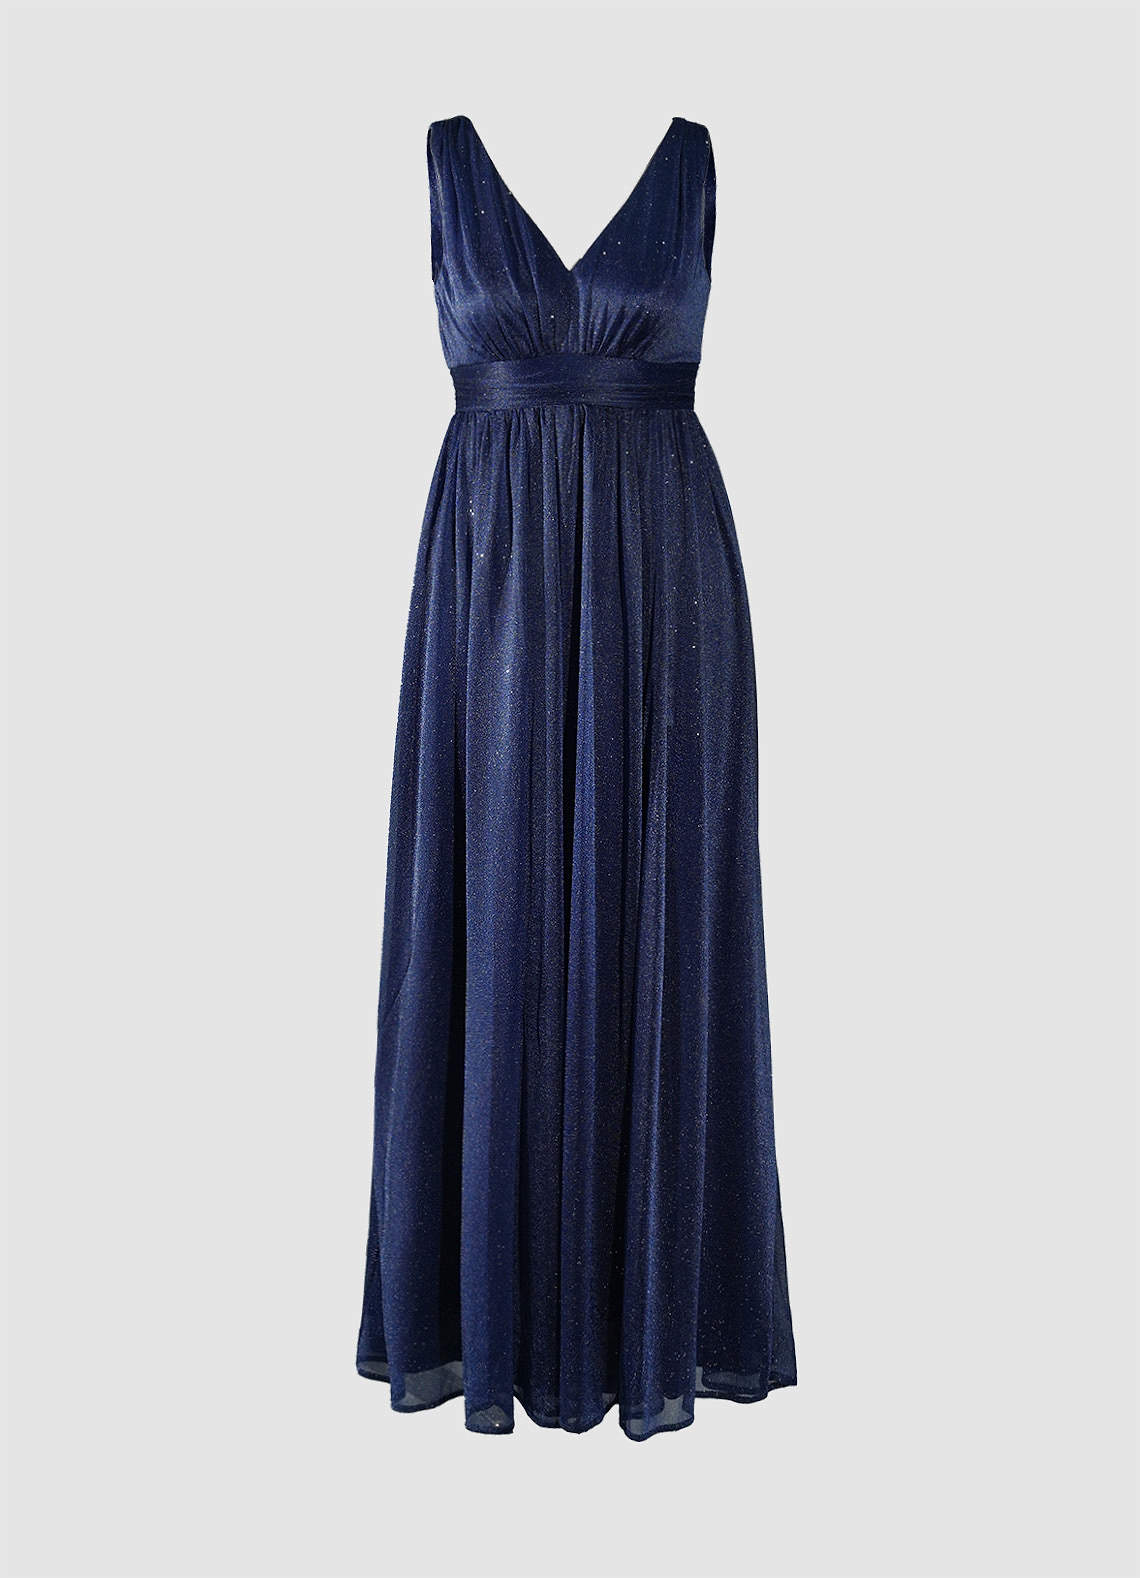 Azazie Homecoming Dress Flowy V Neck Mesh Maxi Long Dress Summer Formal Black Tie Prom Sleeves Dress Navy Blue